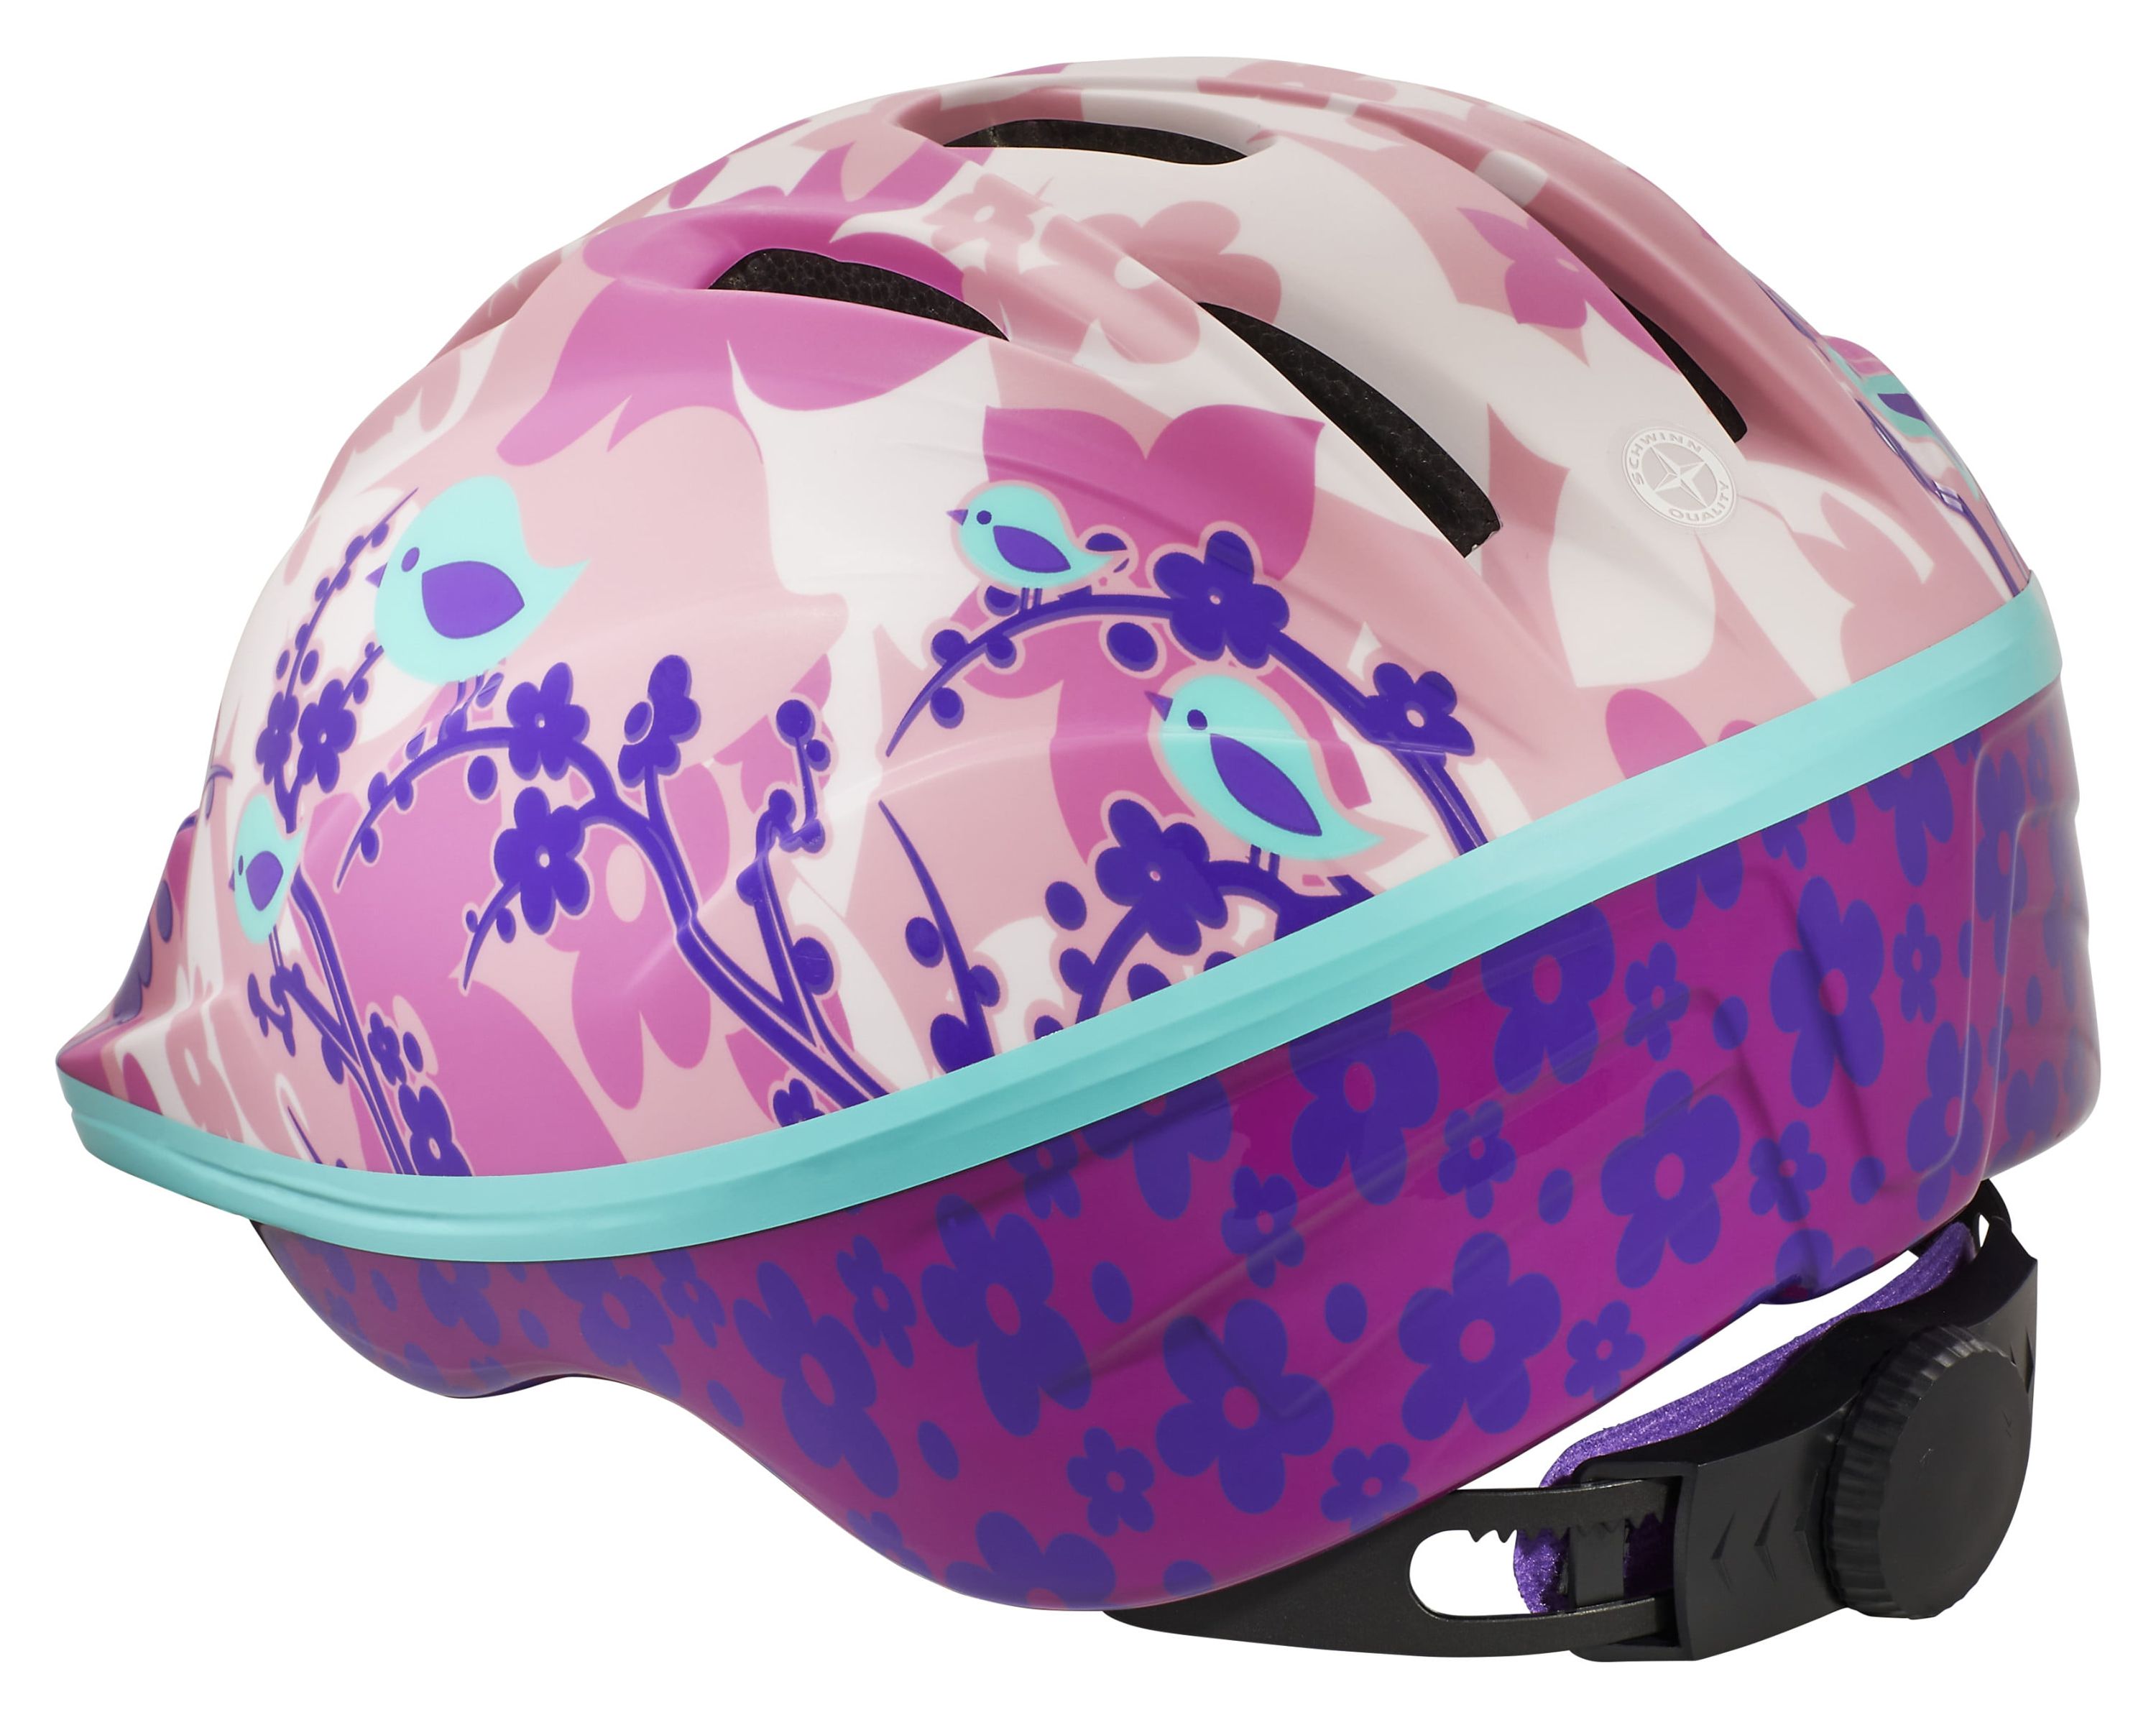 Schwinn Classic Bike Helmet for Kids, Ages 5-8, Pink - image 2 of 7